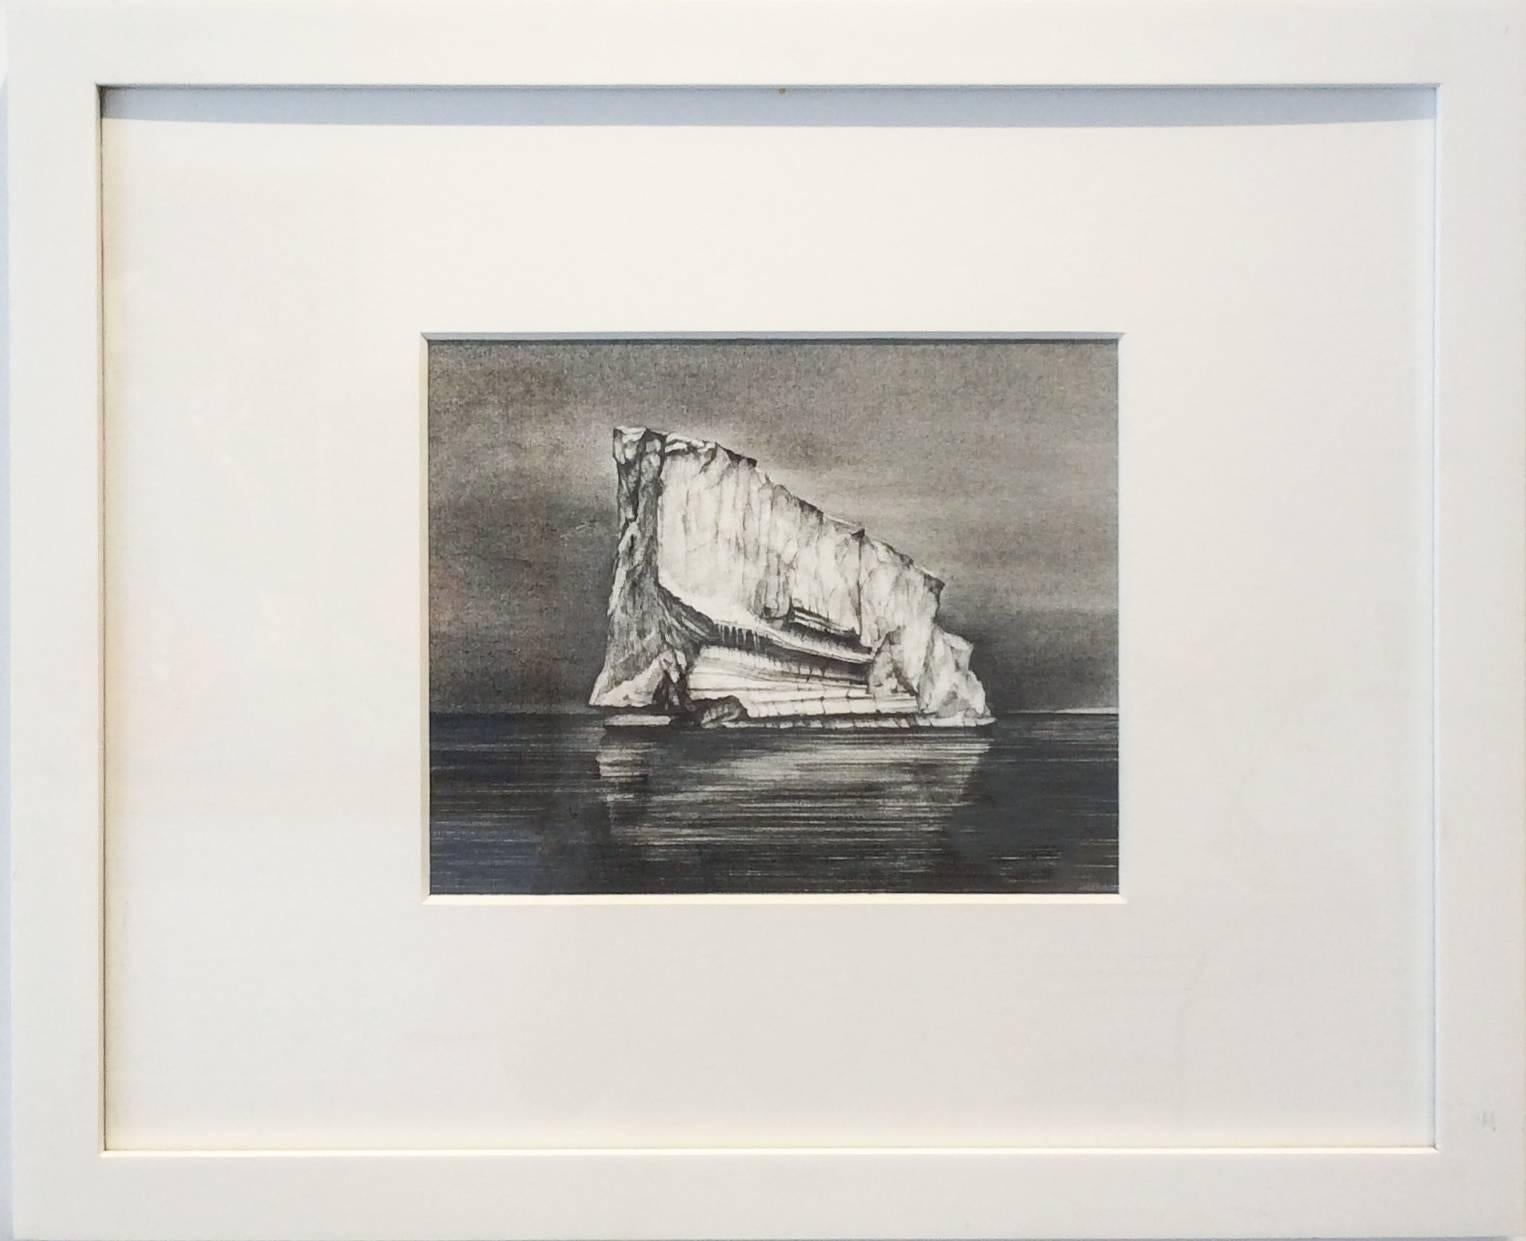 Iceberg Drawing 2: Black and White Landscape Drawing of Iceberg in Water, Framed - Art by Juan Garcia-Nunez